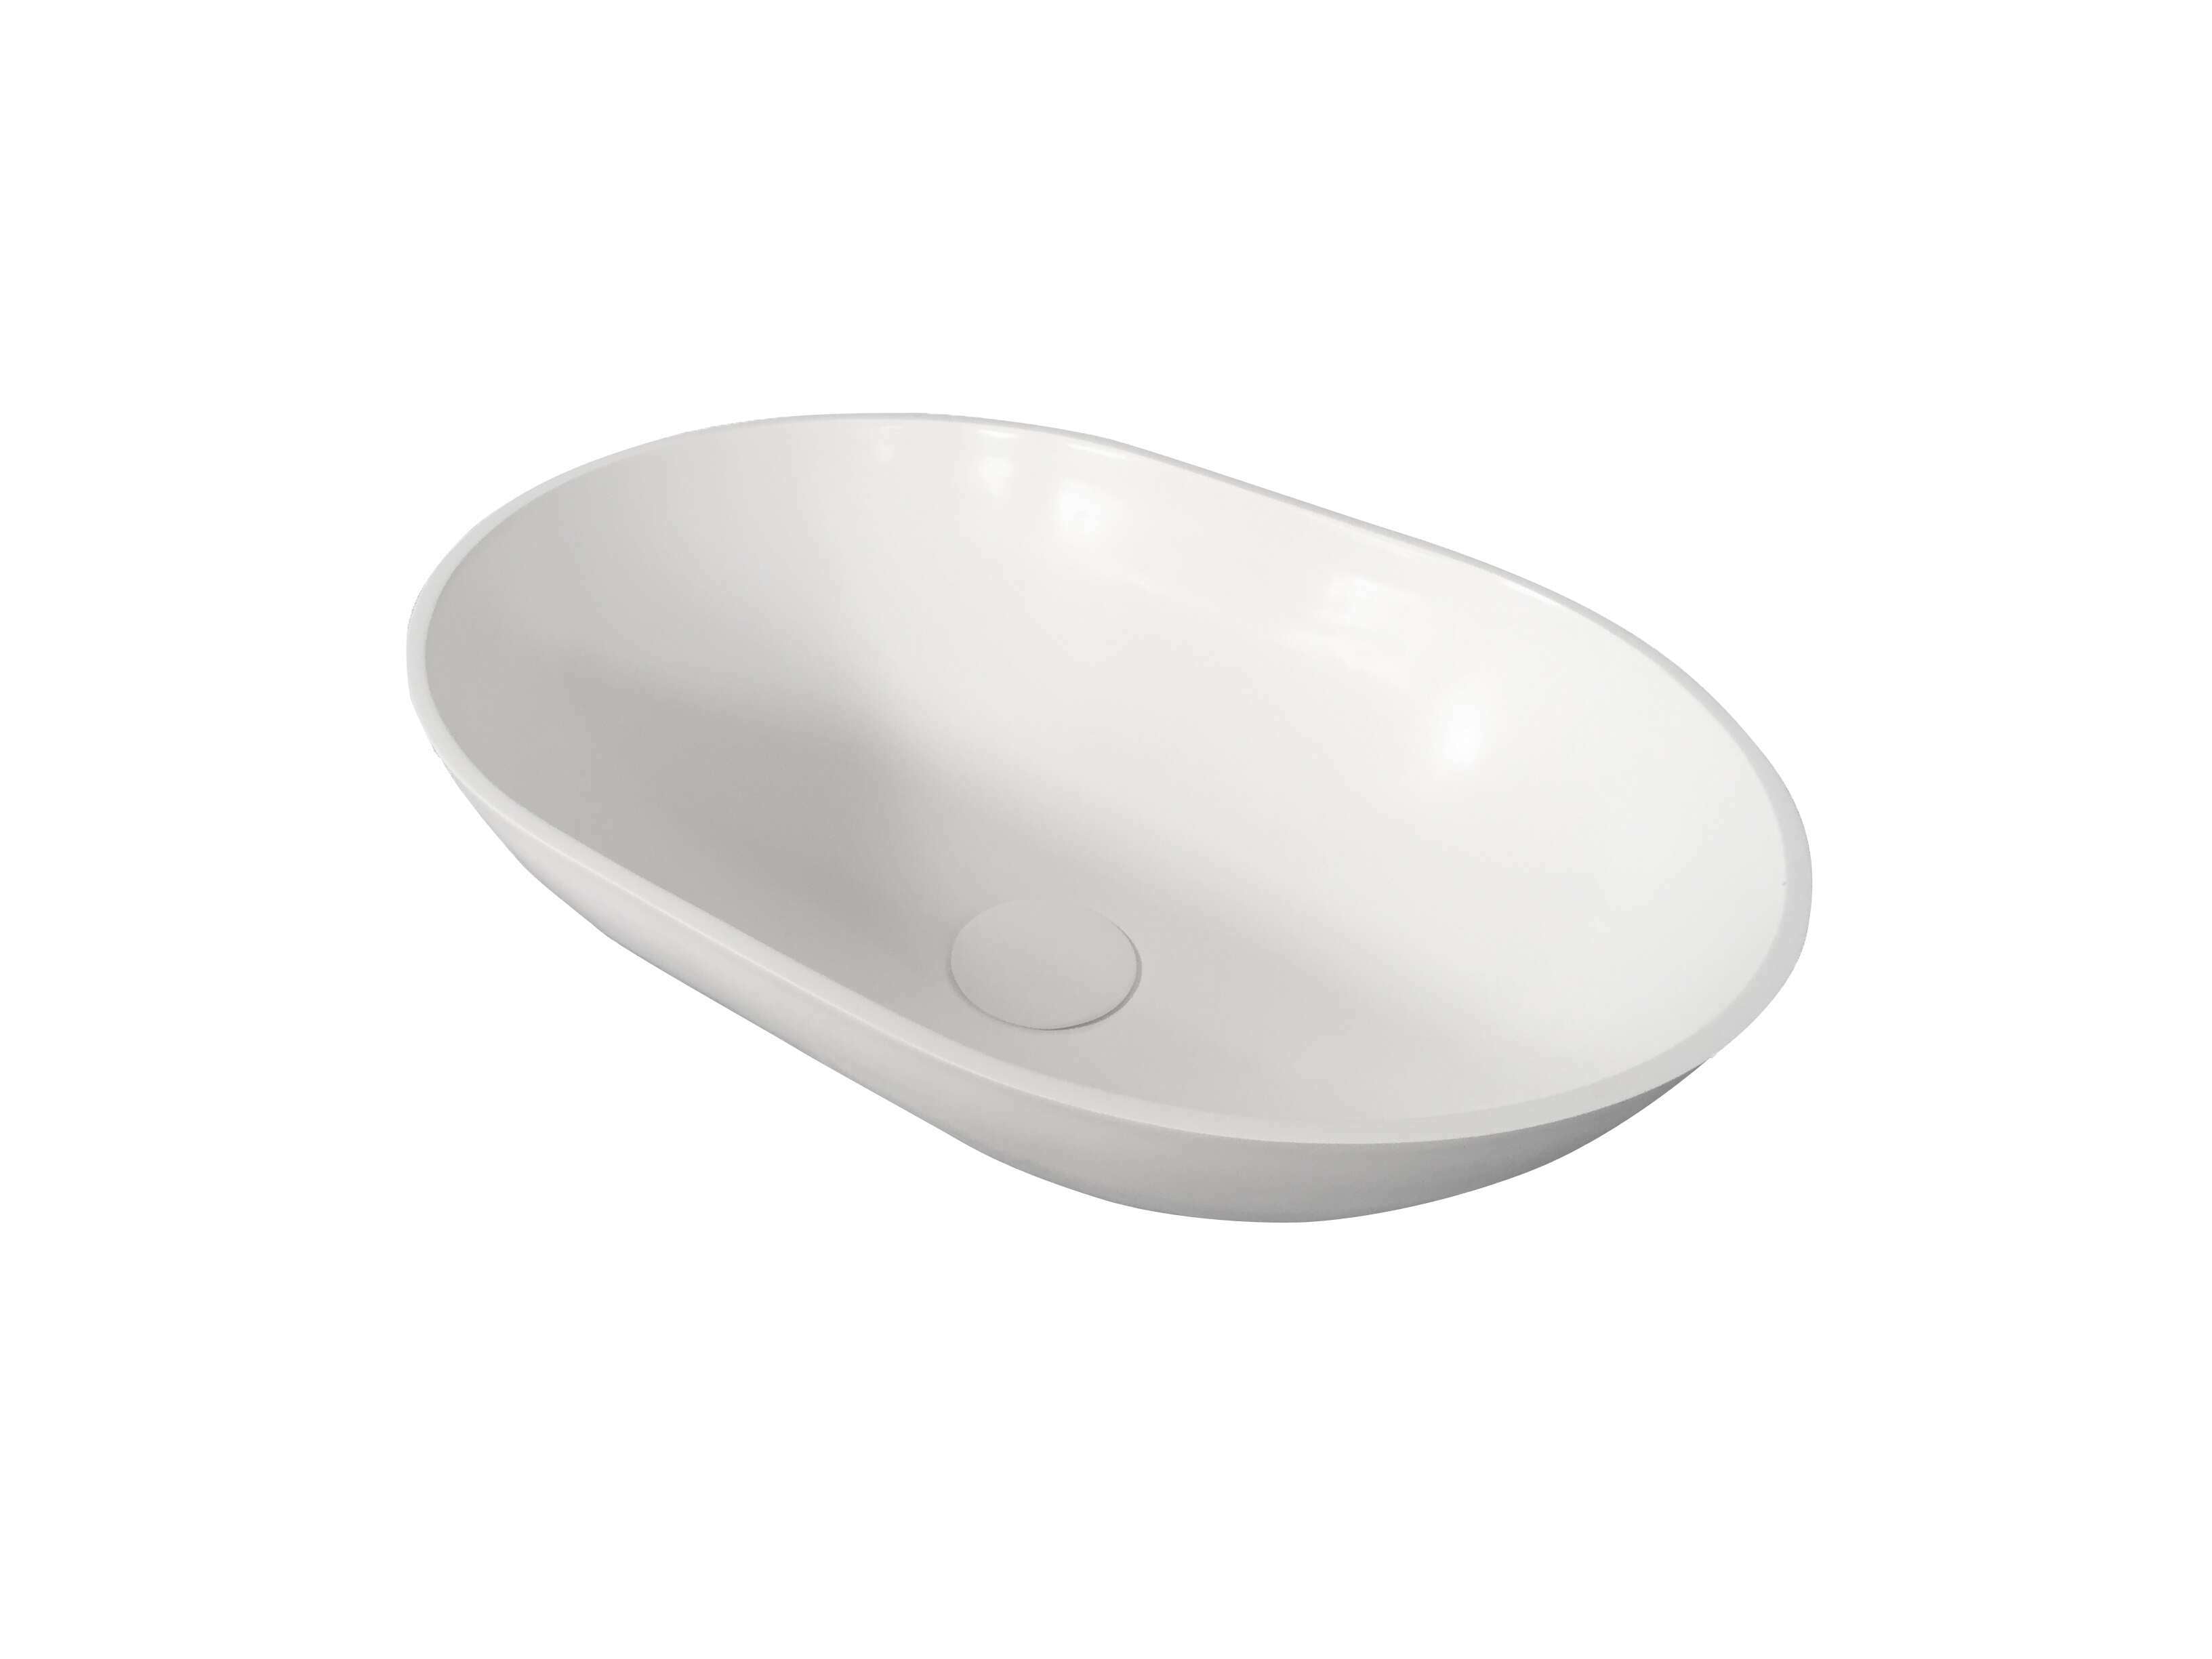 Collection Bora - Vasque à poser ovale en Solid surface - AMBRA